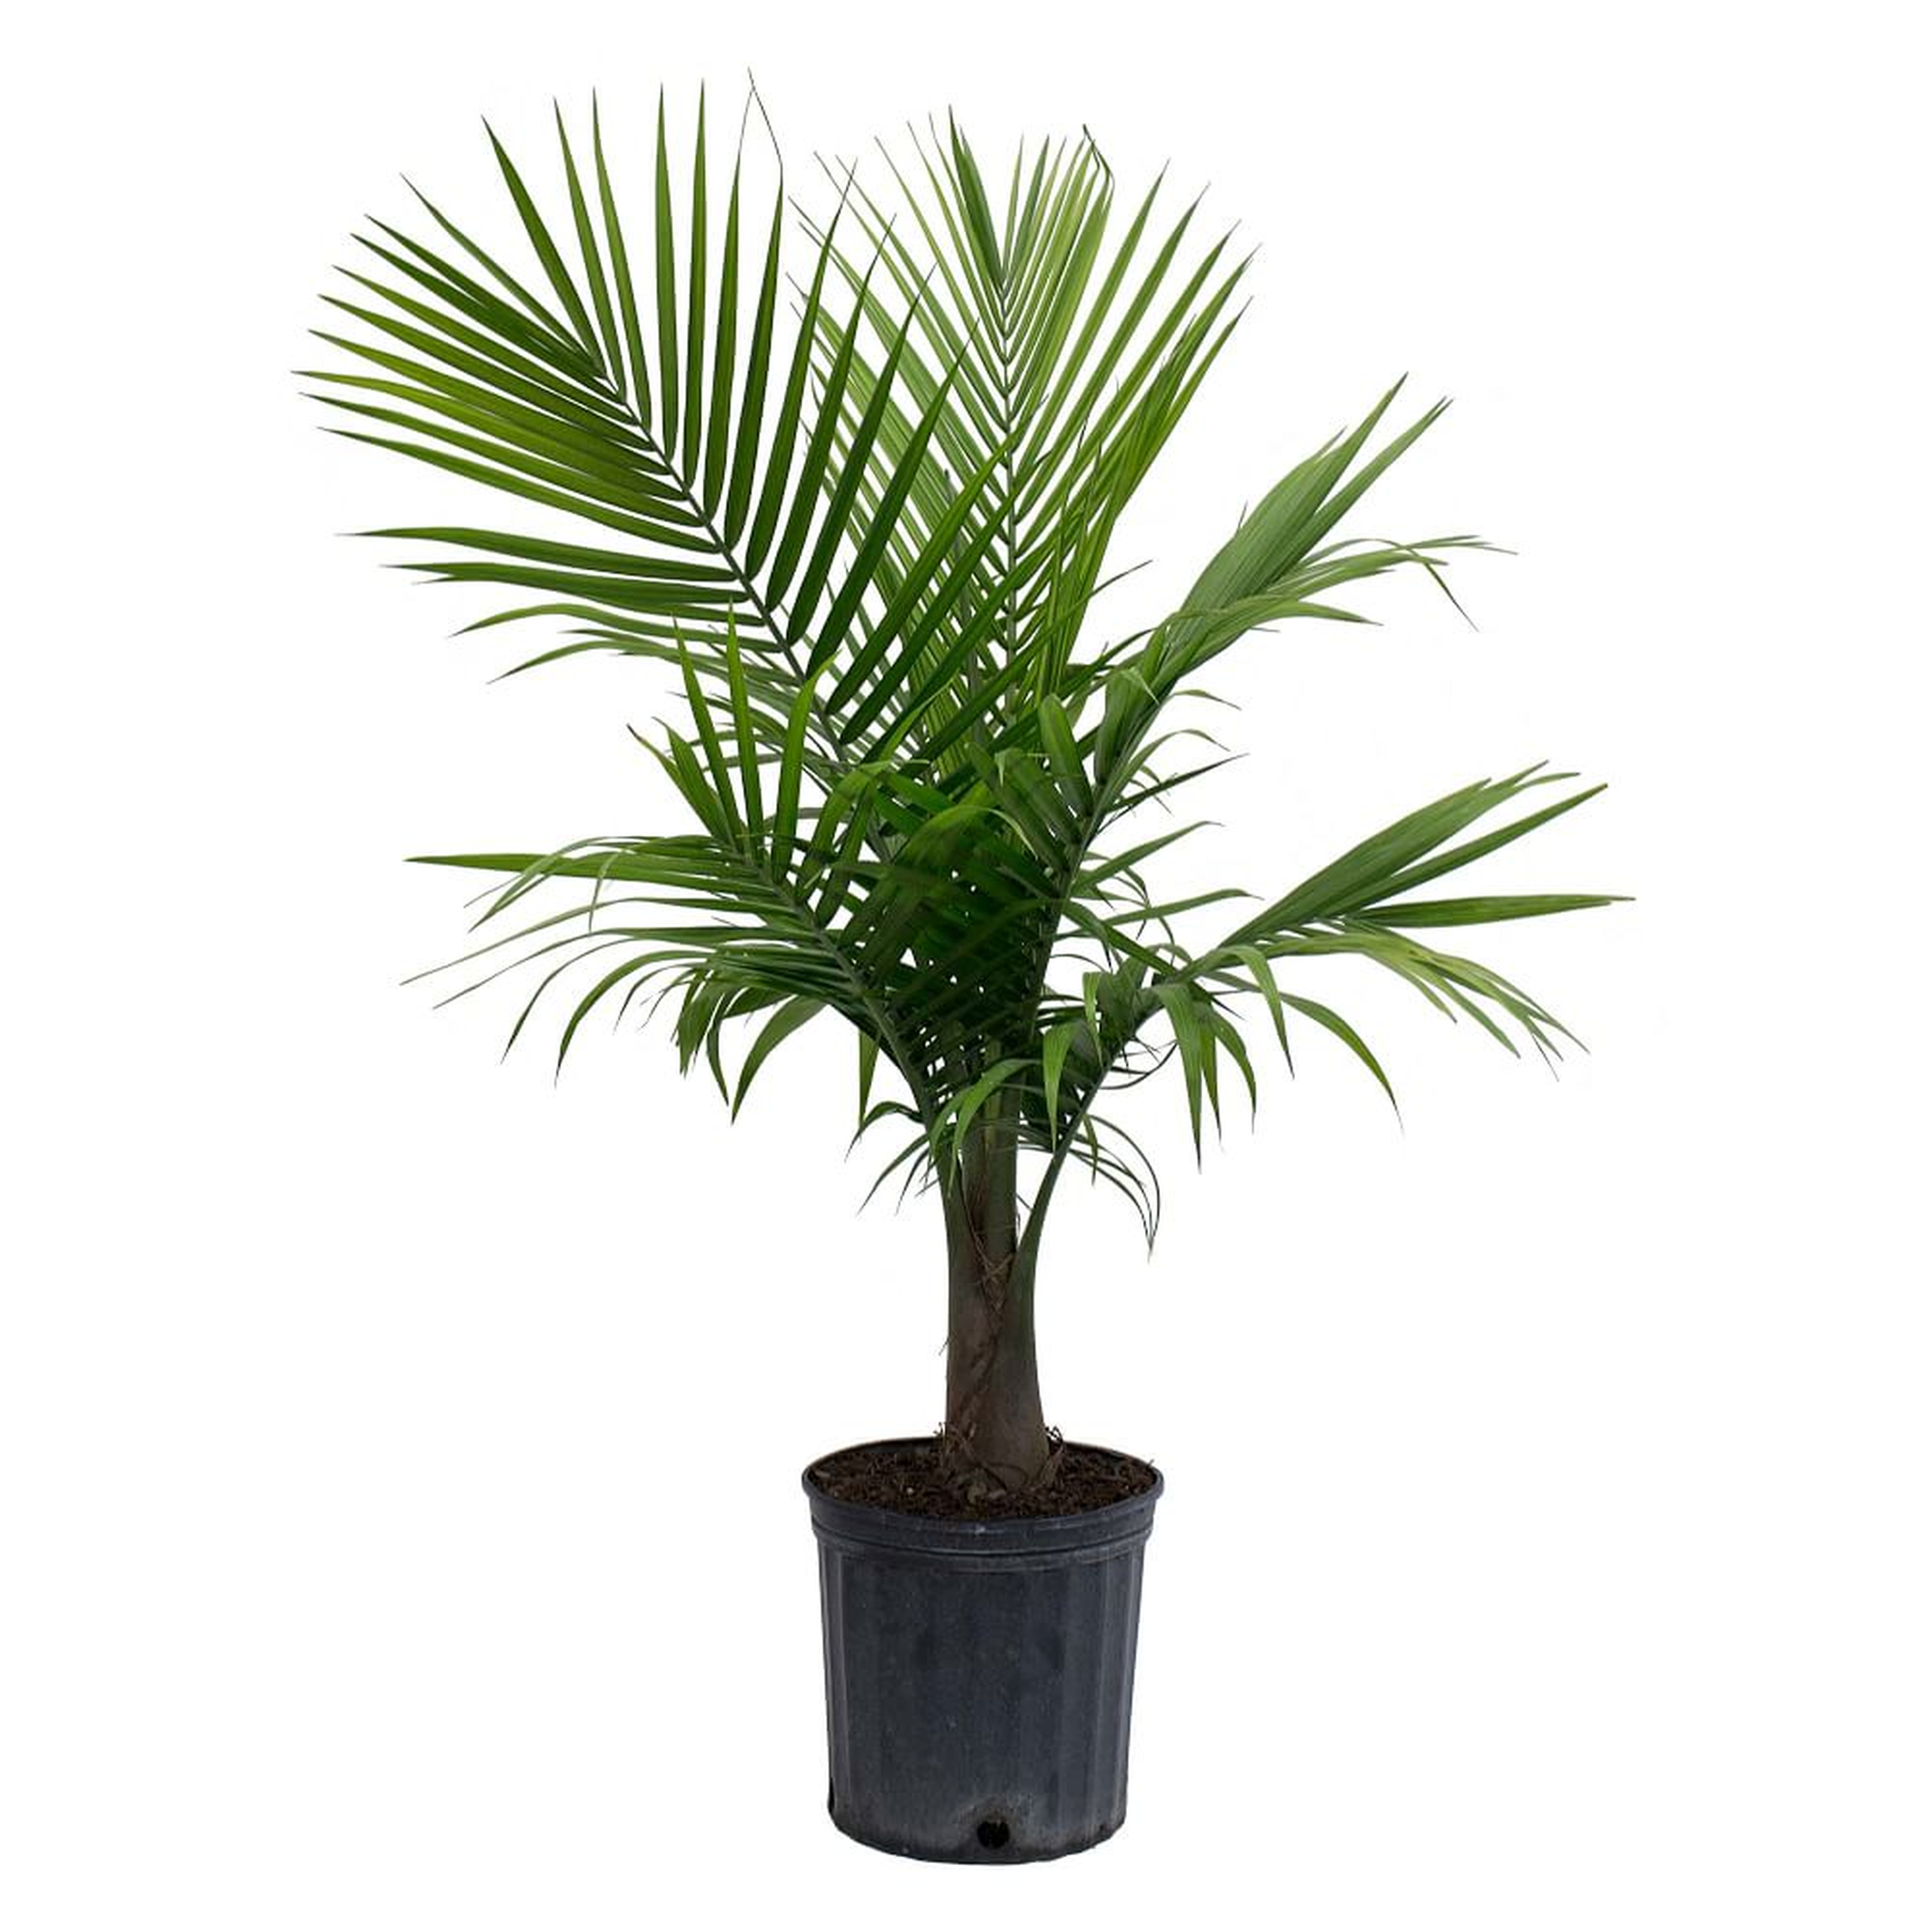 Live Majesty Palm Plant in 10" Grower Pot - West Elm